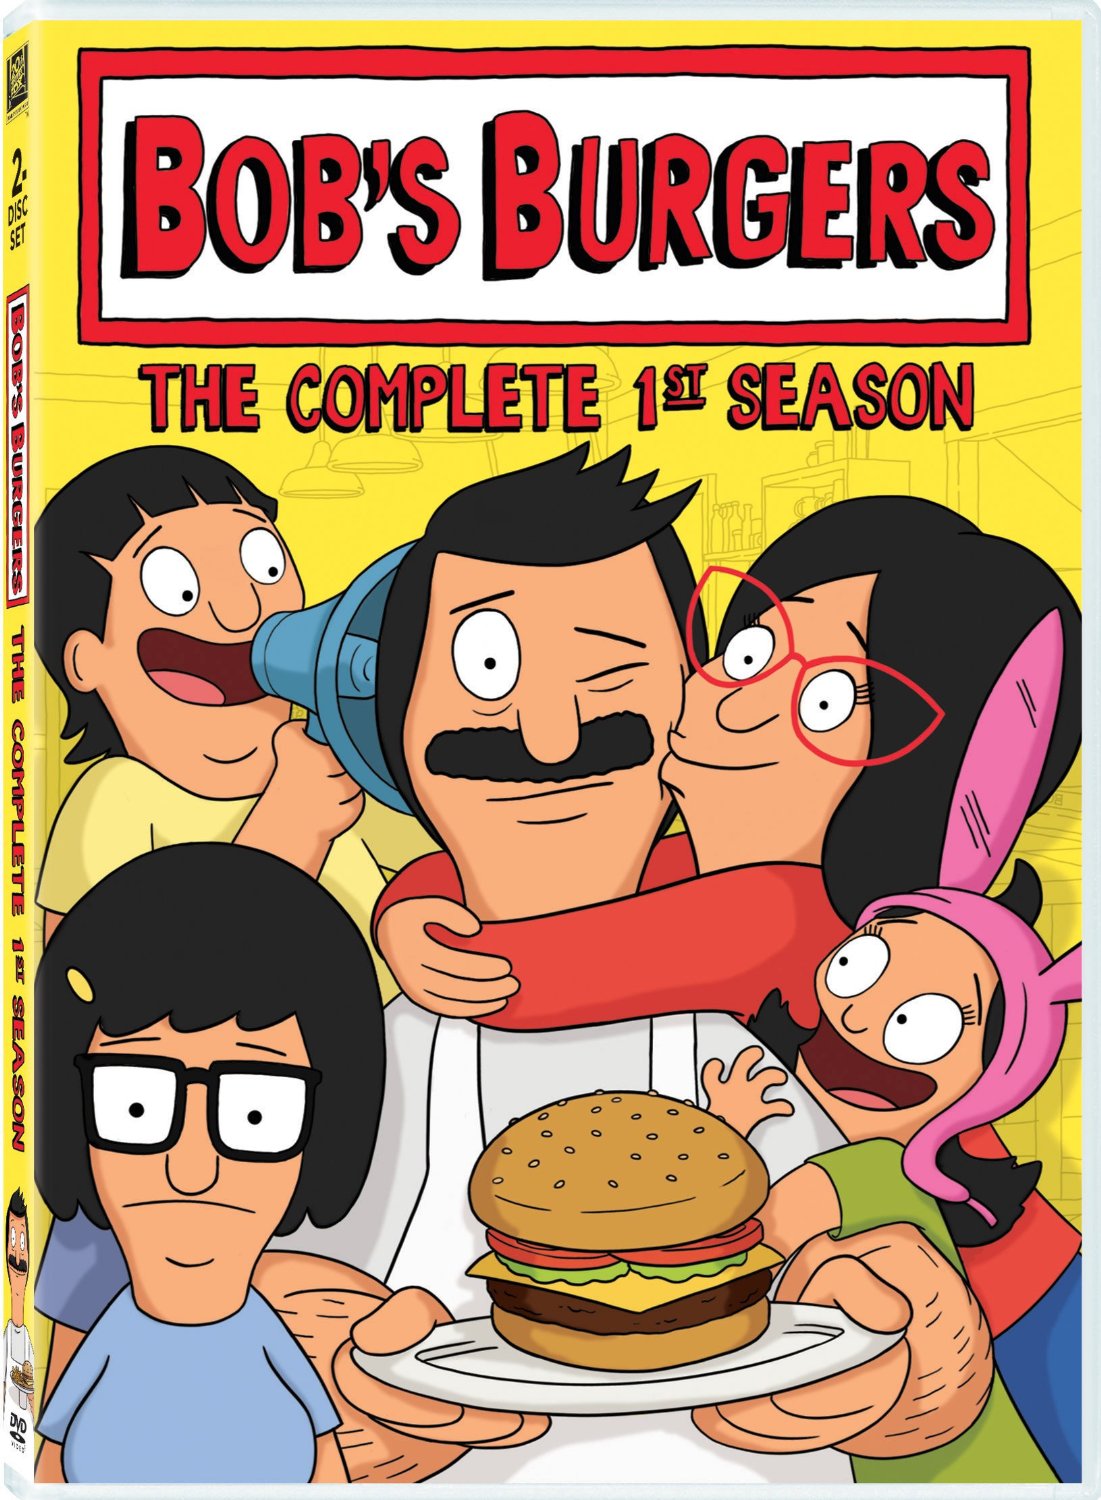 bobs burger season 1 - Bob'S Burgers De The Complete 14 Season Rob'S Burgers The Complete 1ST Season 0 0